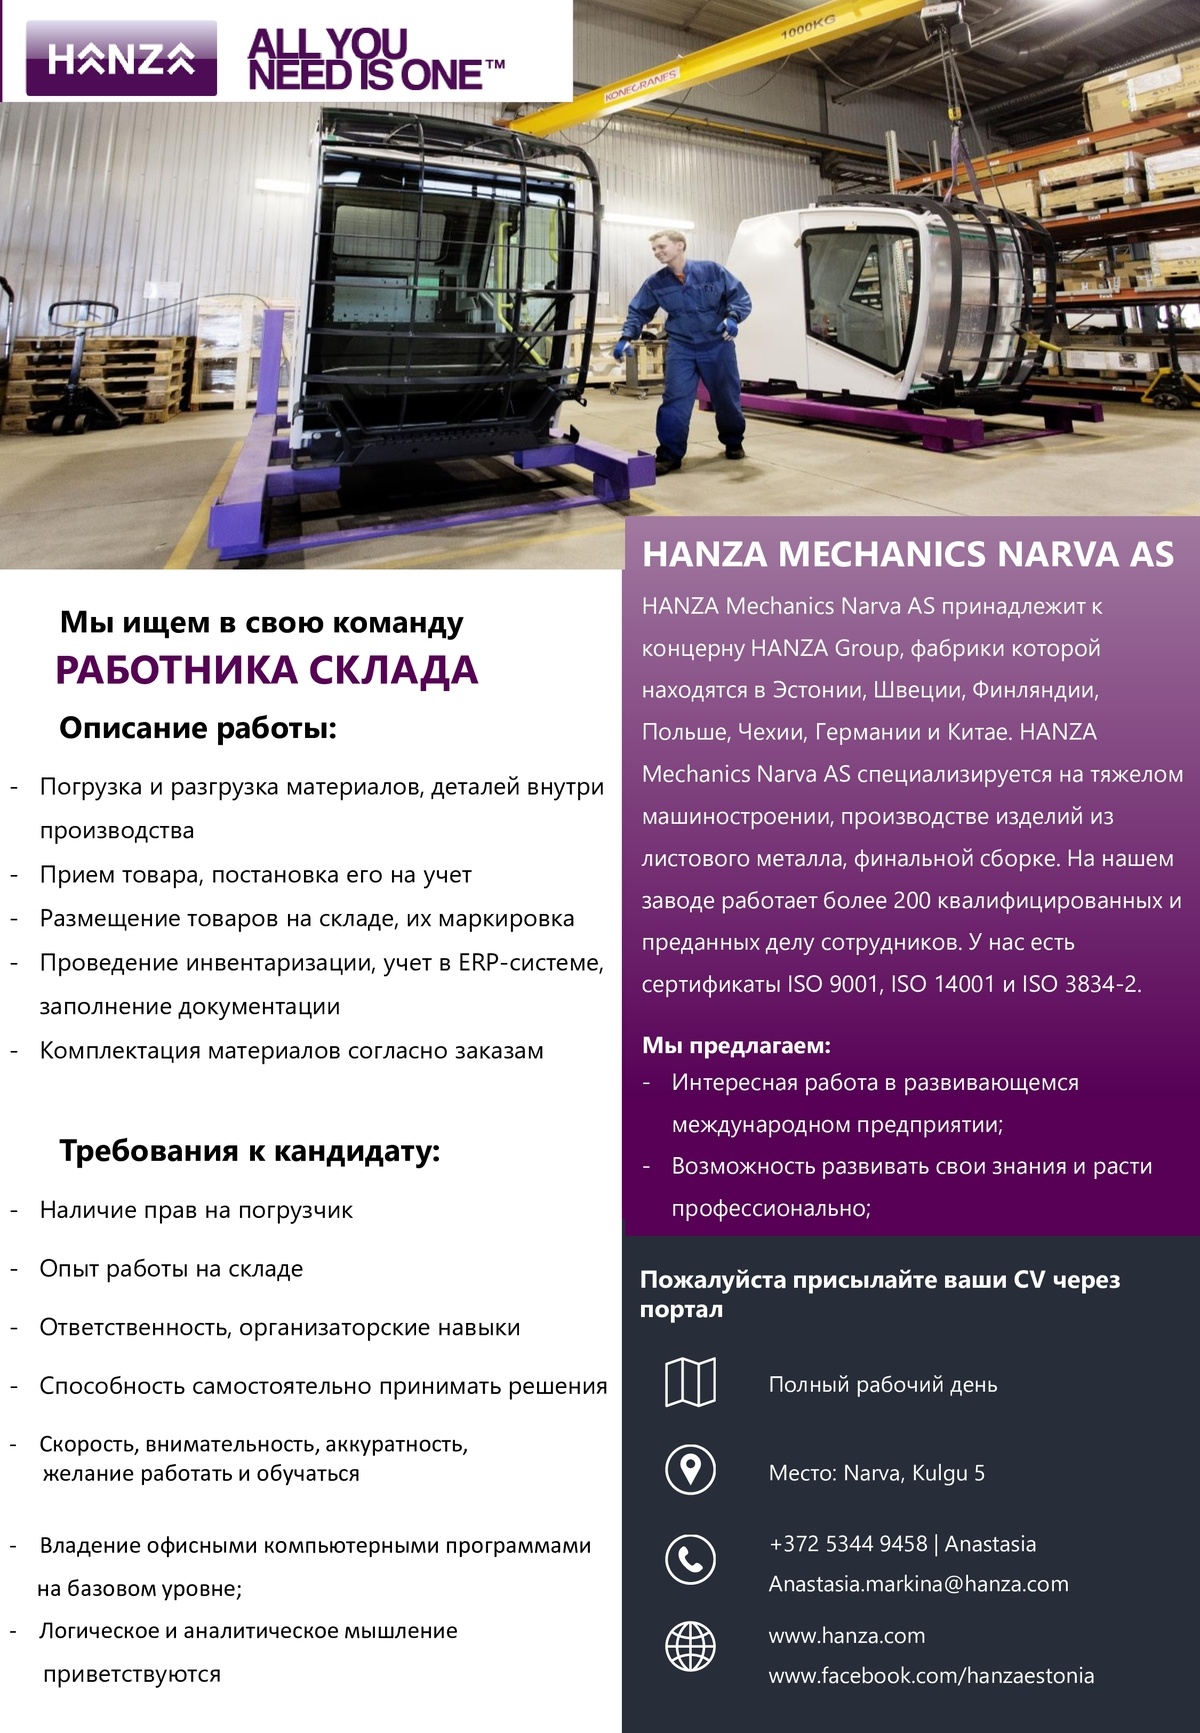 HANZA Mechanics Narva AS Работник склада